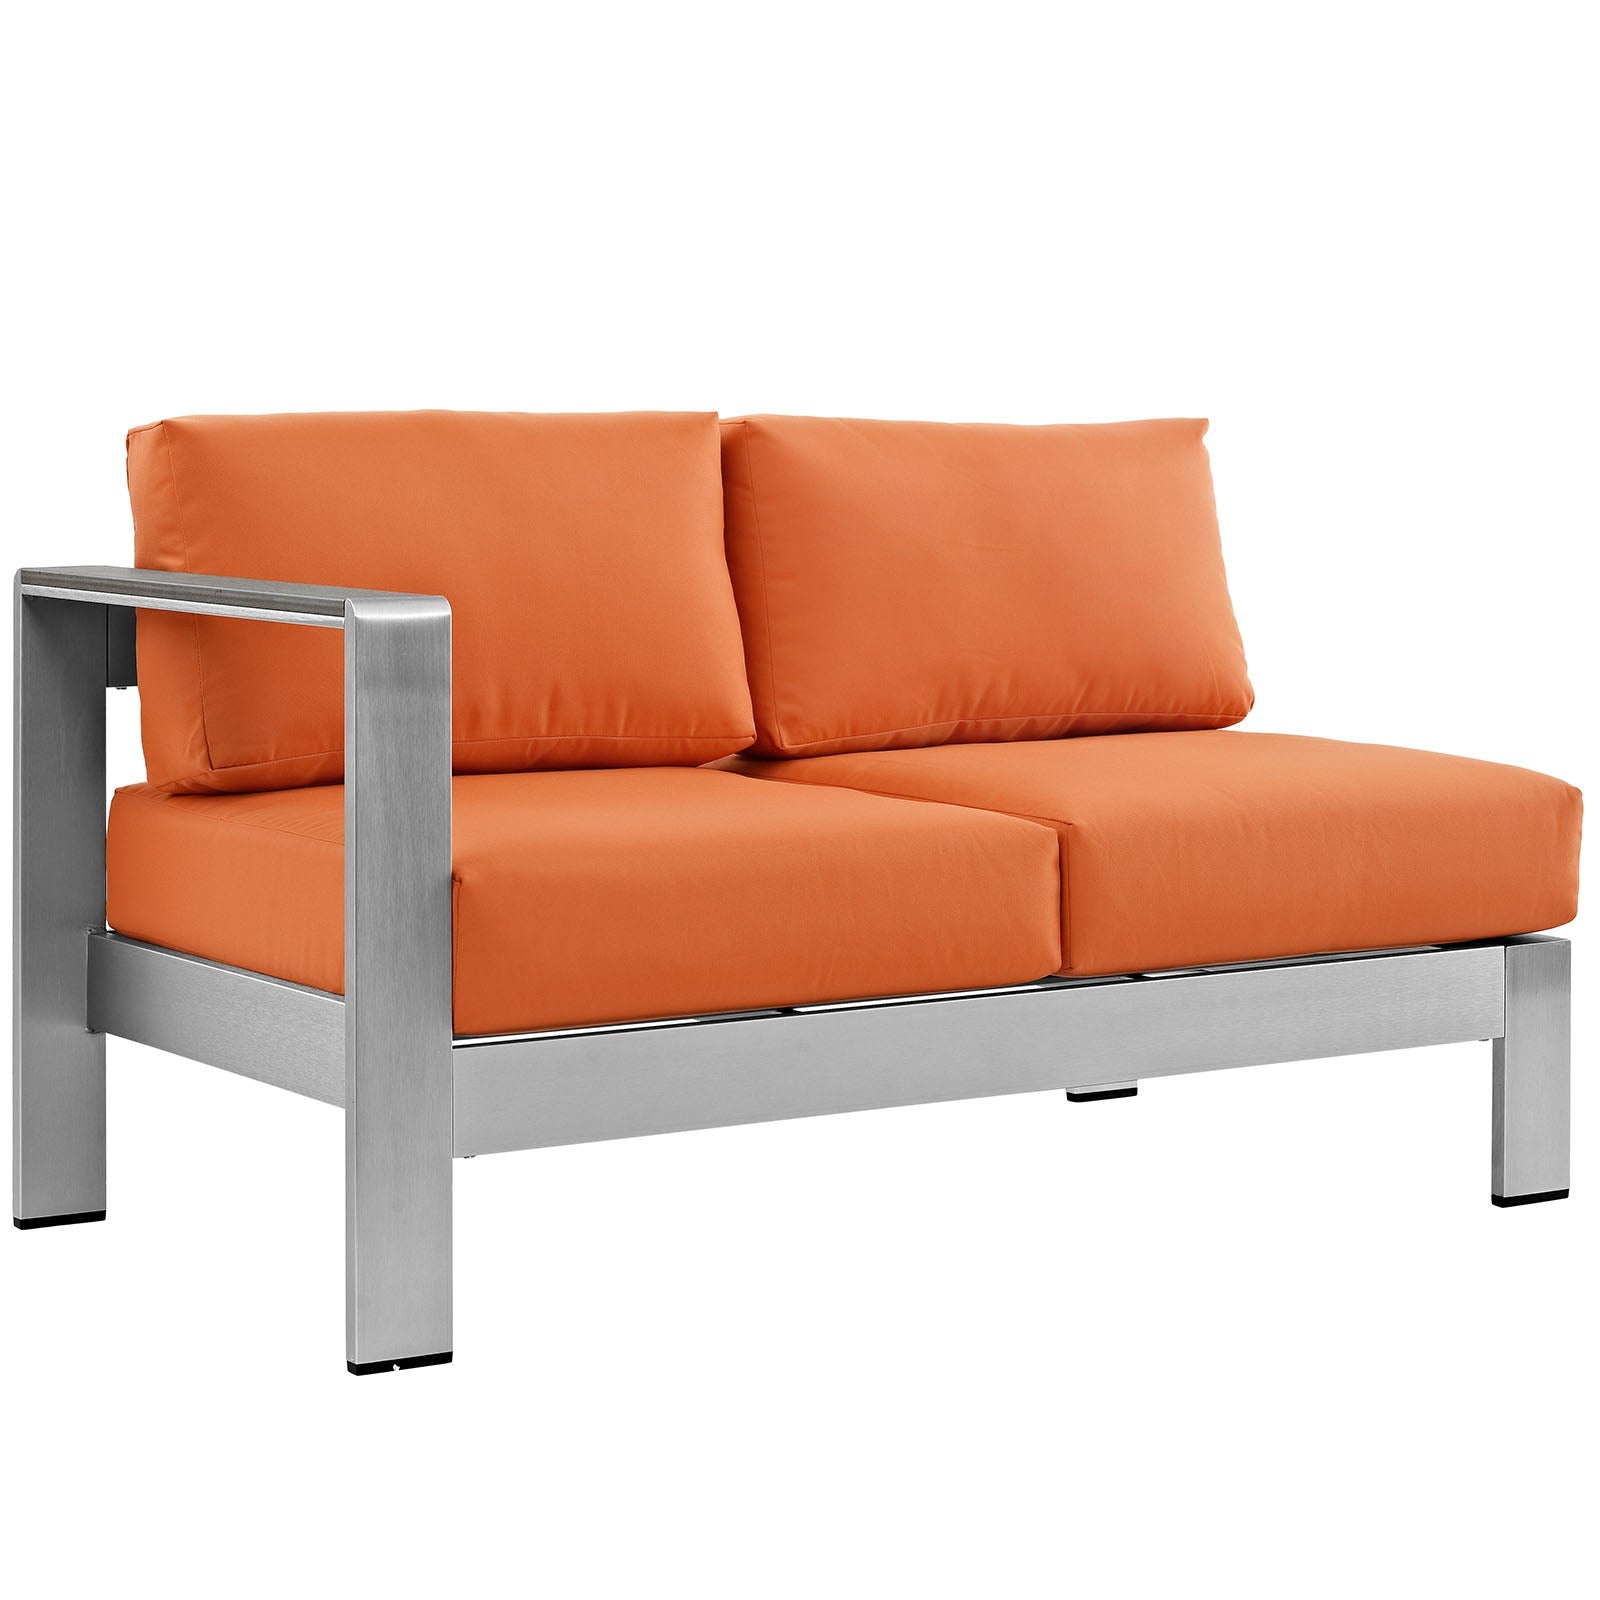 Shore 4 Piece Outdoor Patio Aluminum Sectional Sofa Set - Orange